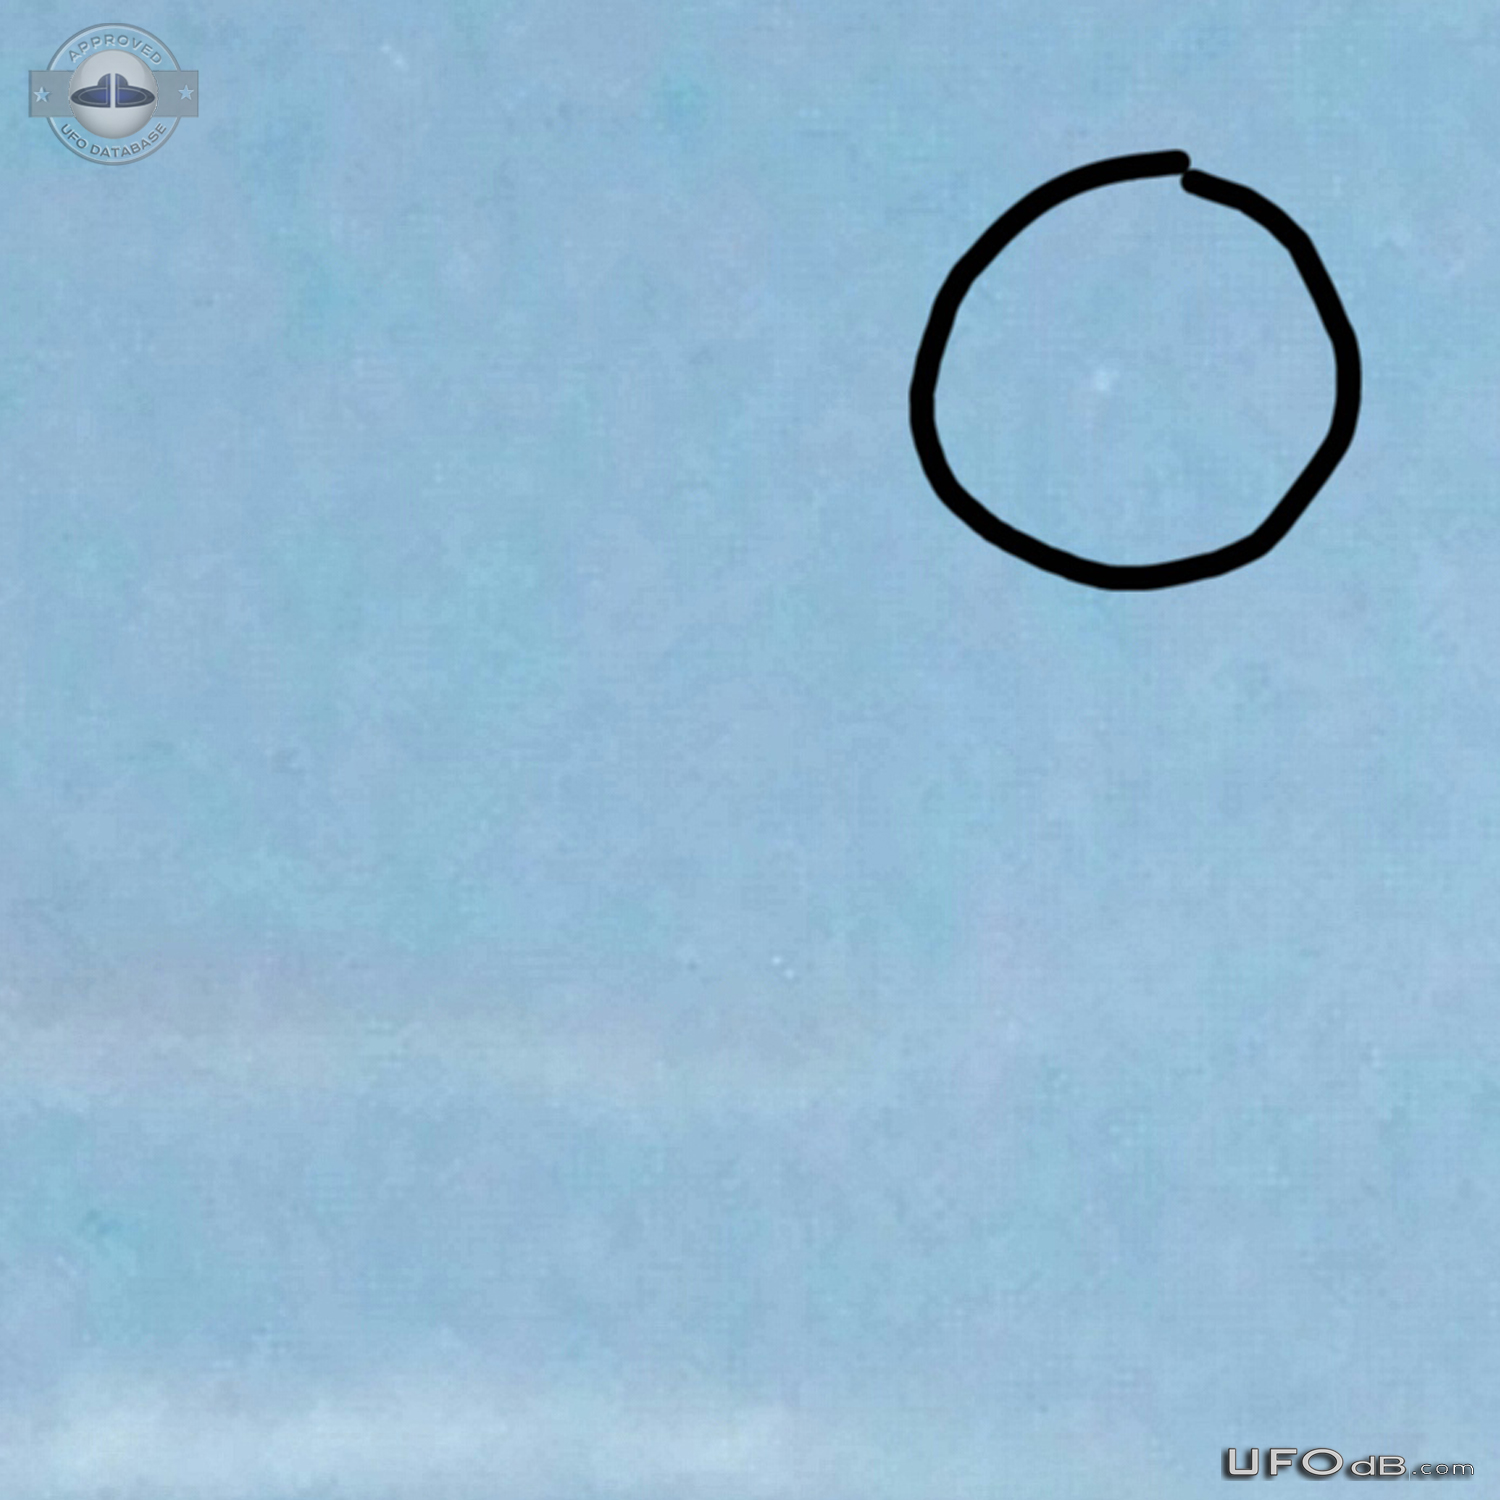 White disc shaped UFO sighting over Saint Marys Georgia USA 2015 UFO Picture #680-2